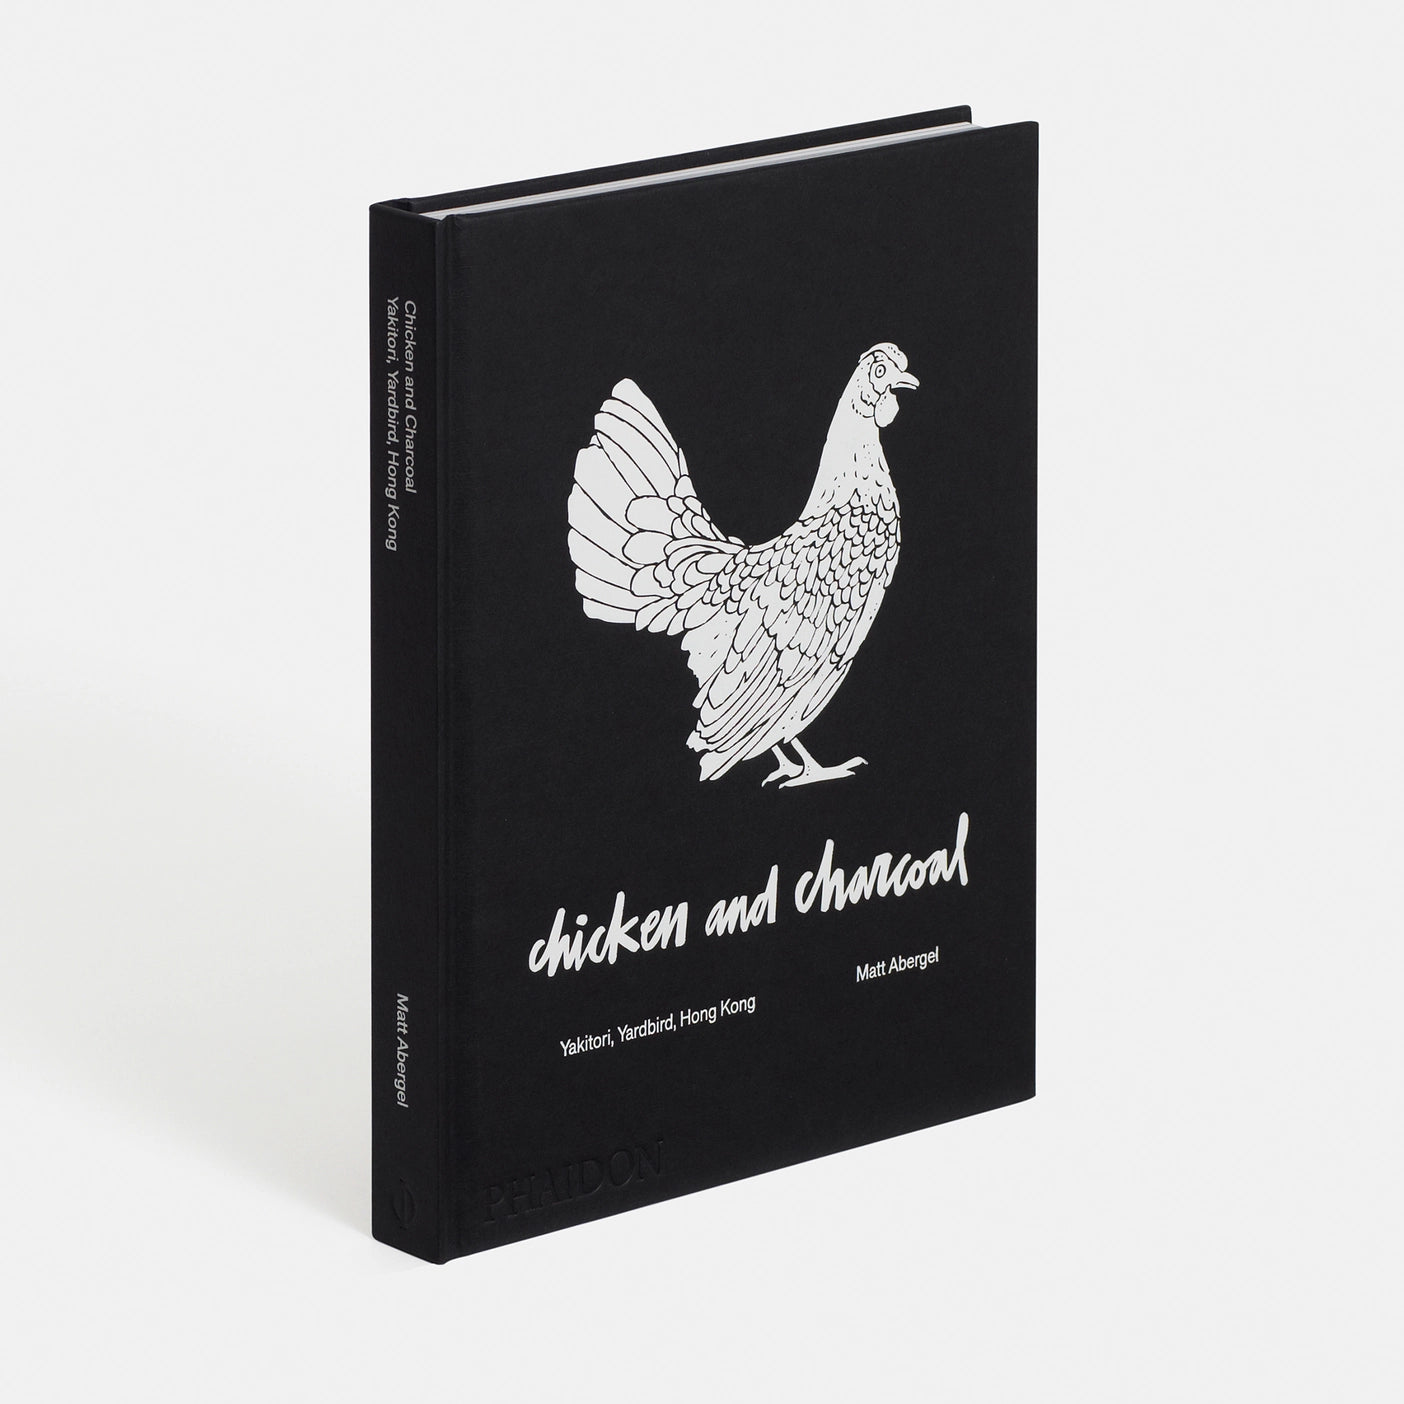 Chicken and Charcoal: Yakitori, Yardbird, Hong Kong
Matt Abergel